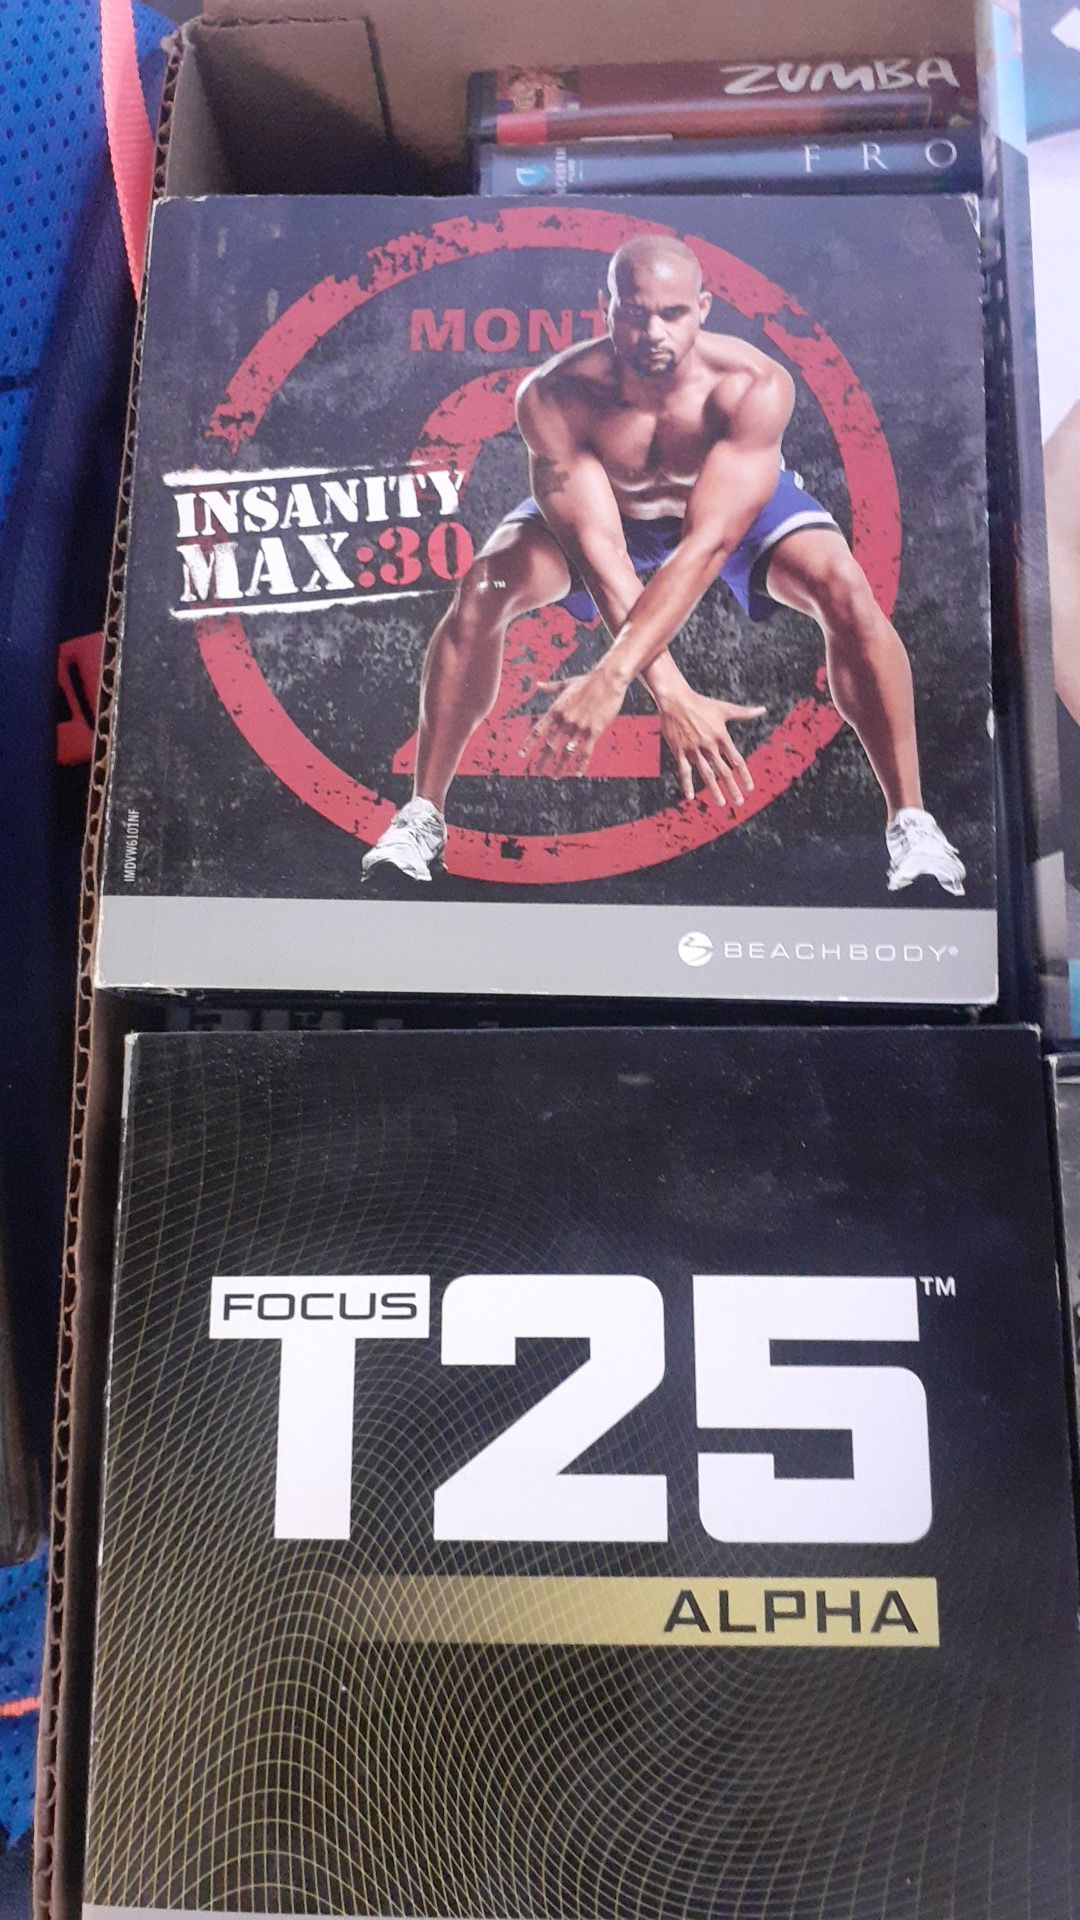 Insanity workout DVD videos